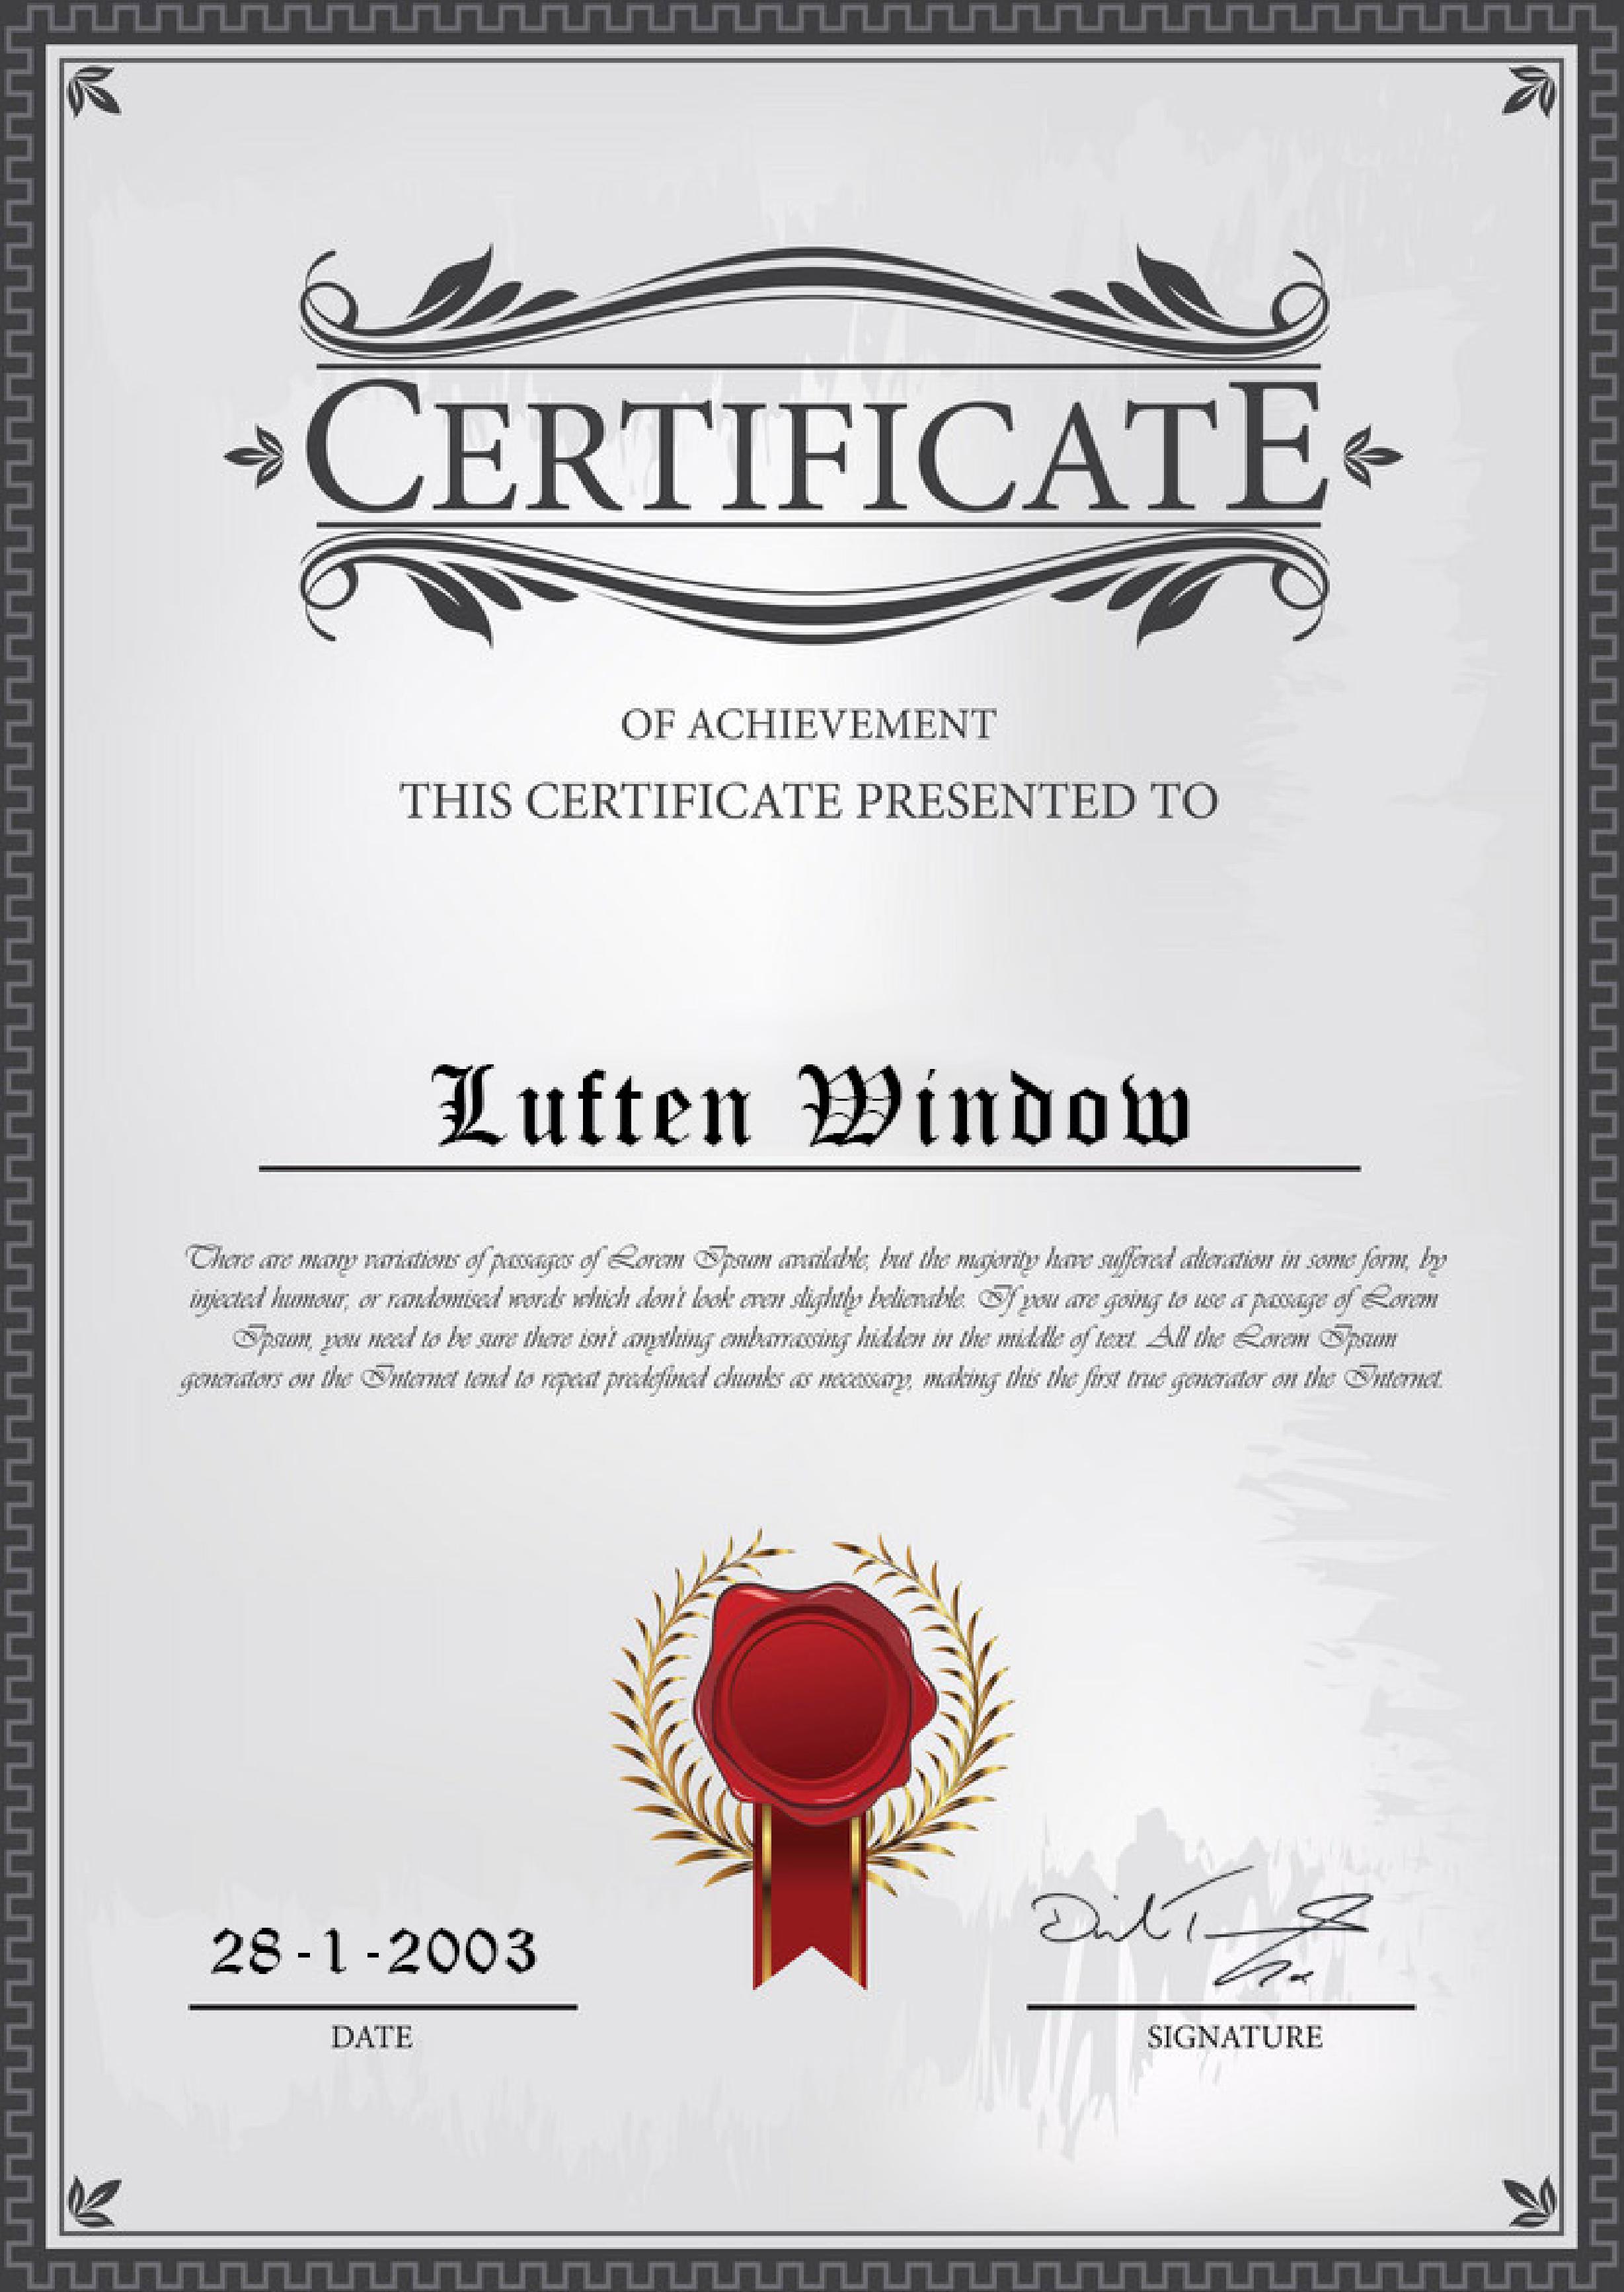 The Certificate Presented to Luften Window